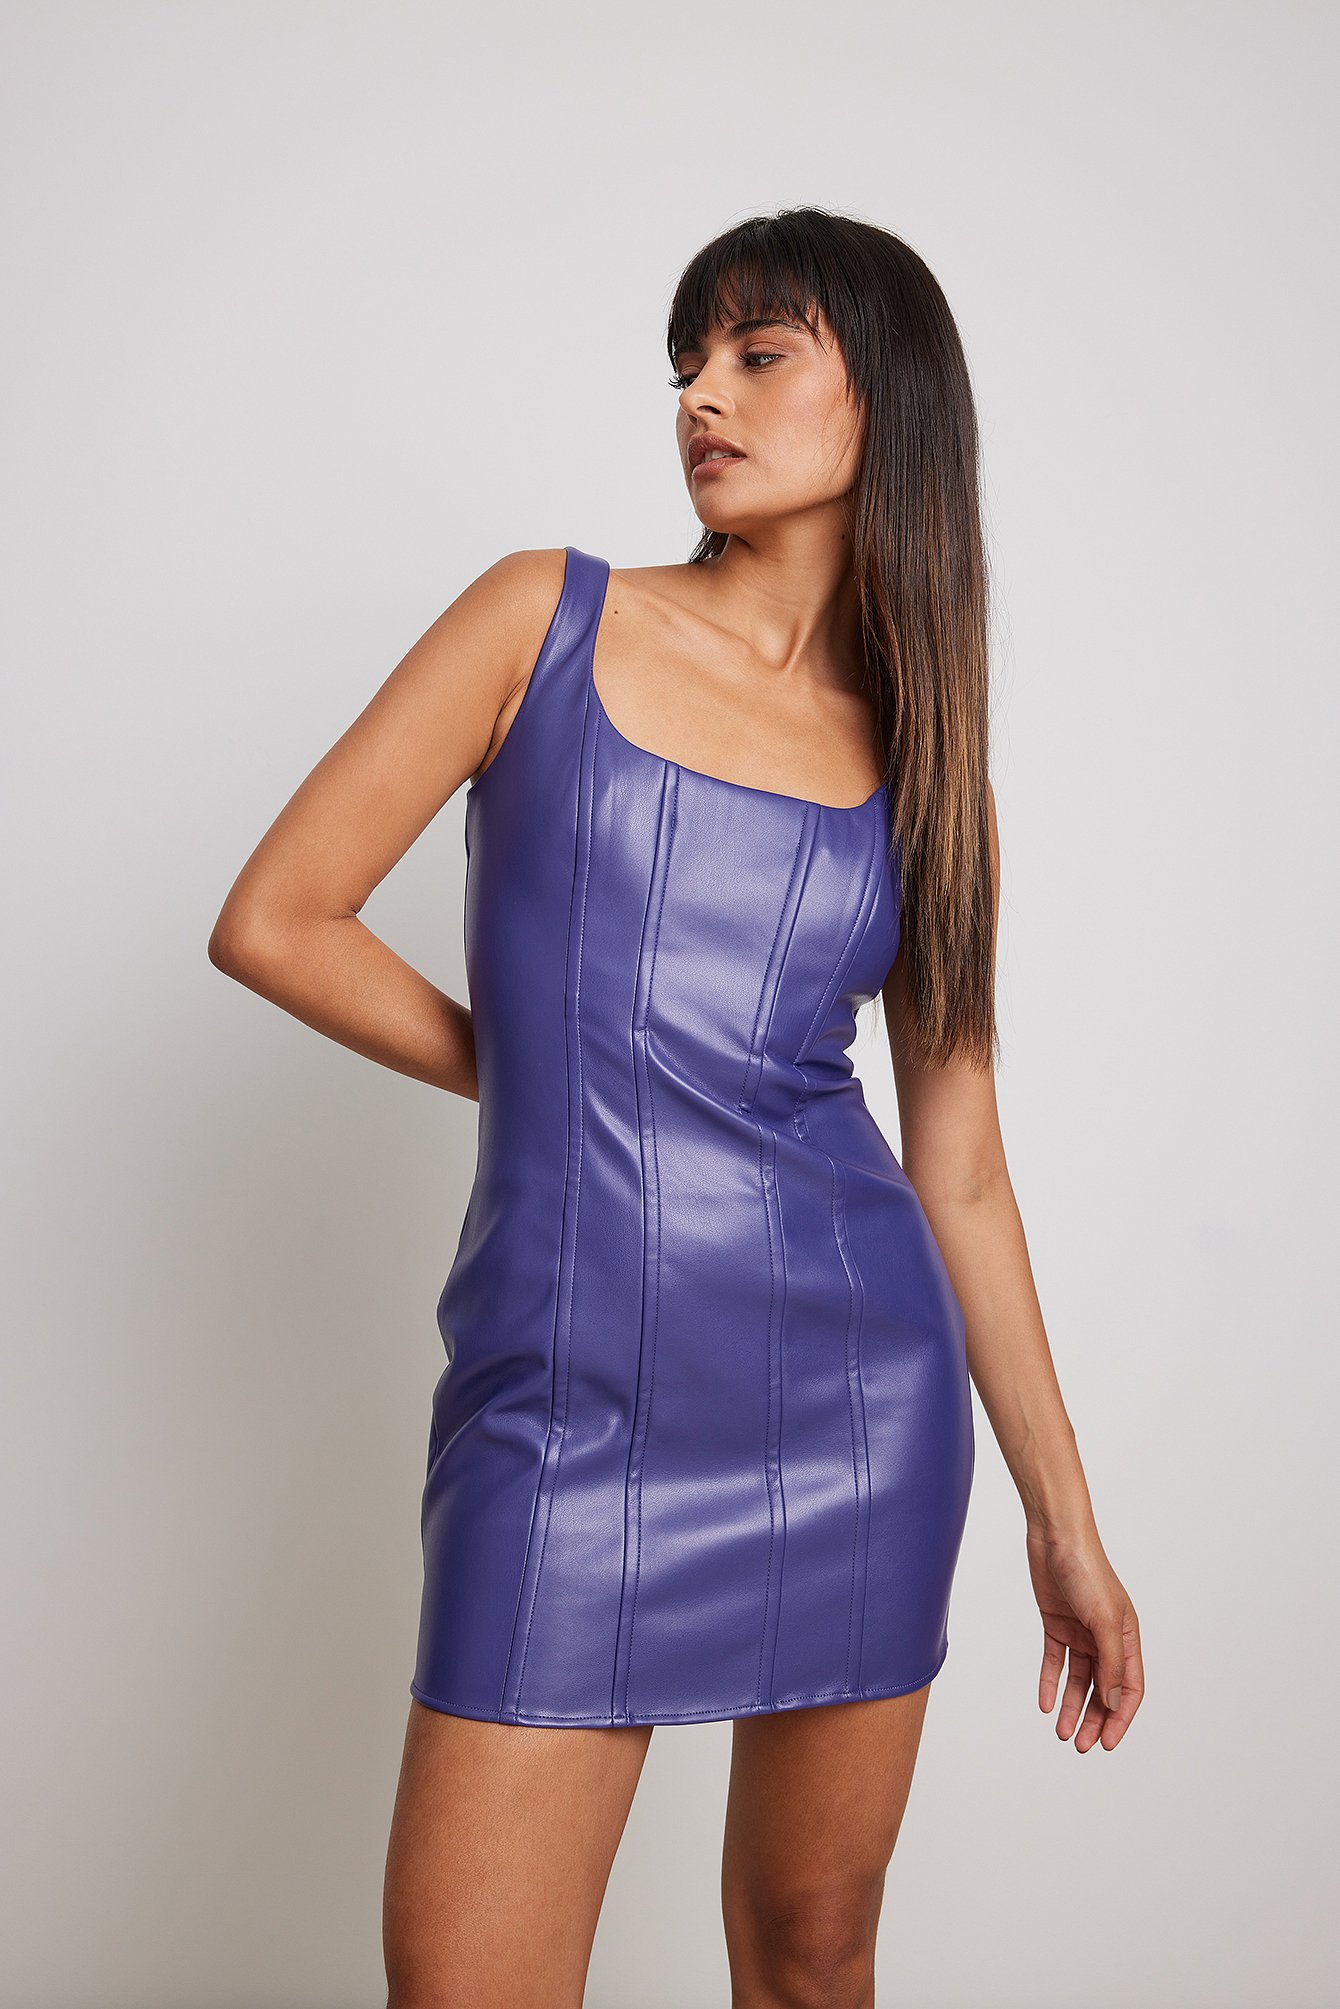 SHEIN SXY Zip Back PU Leather Bodycon Dress ⋆ Women's Store